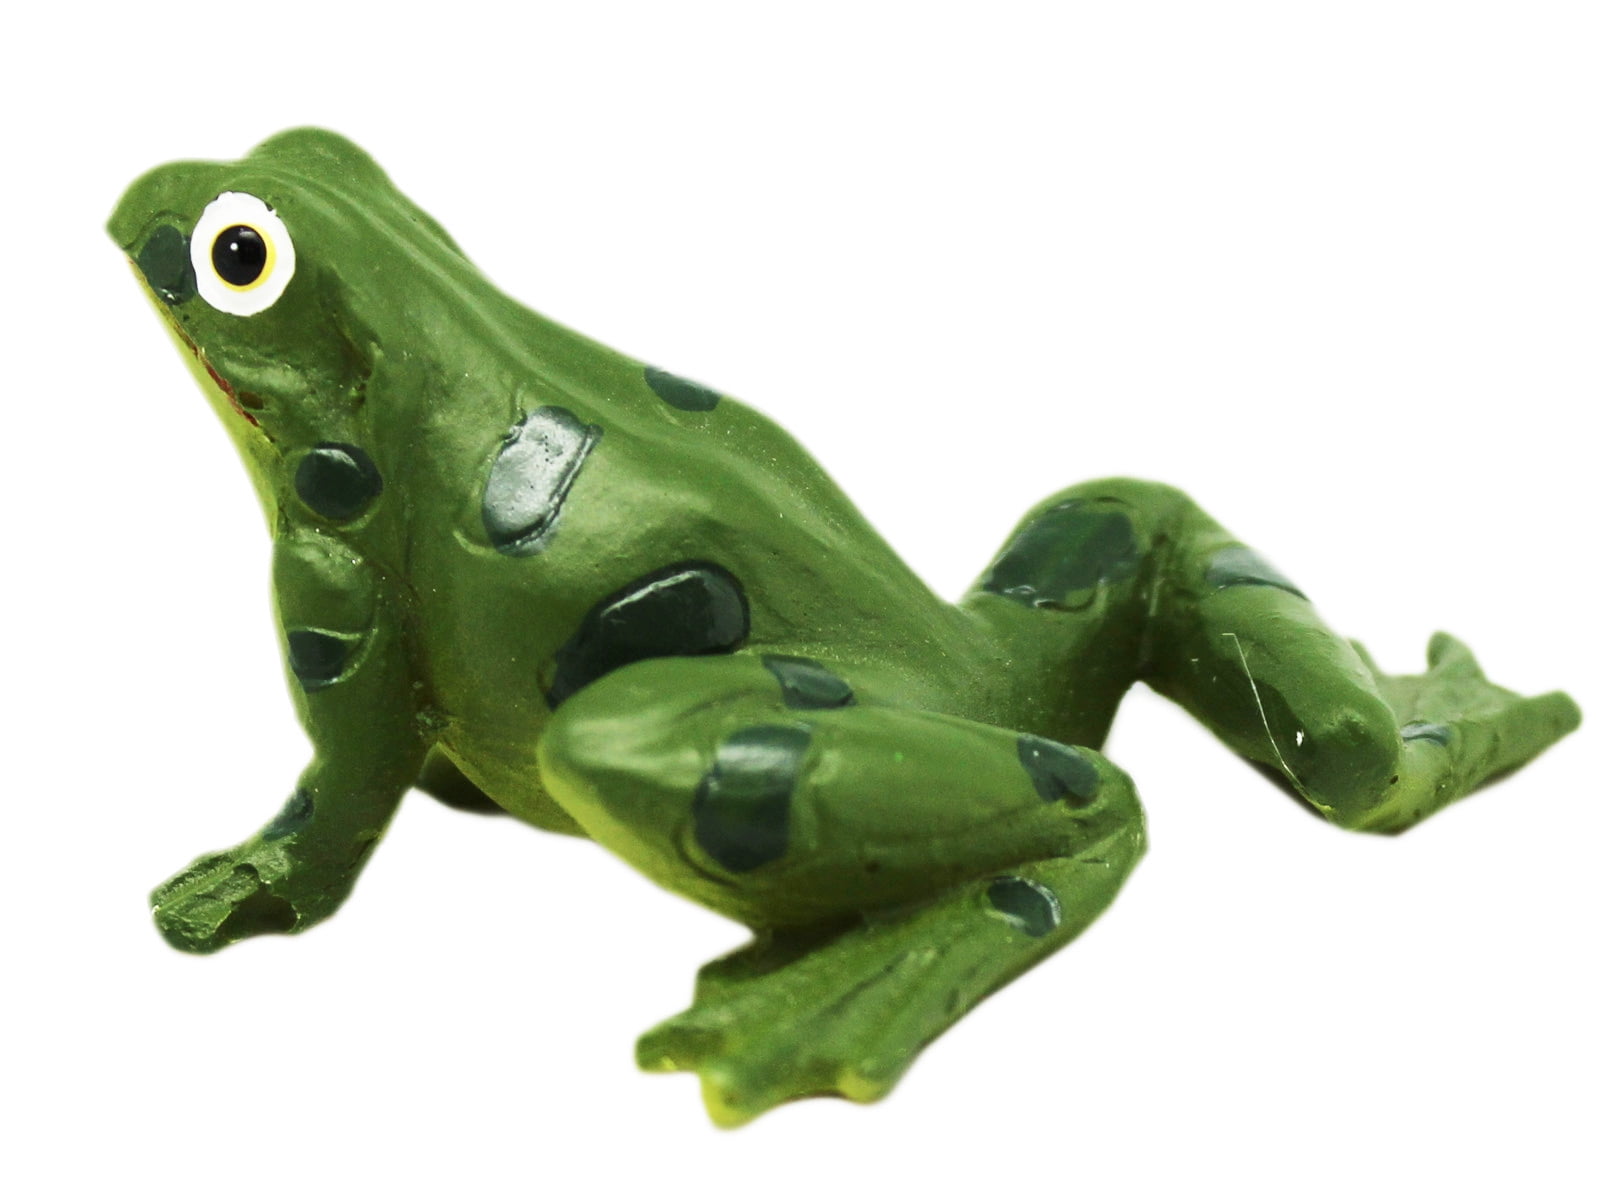 Garden Frog Figurine: One Hand and Foot Forward - Walmart.com